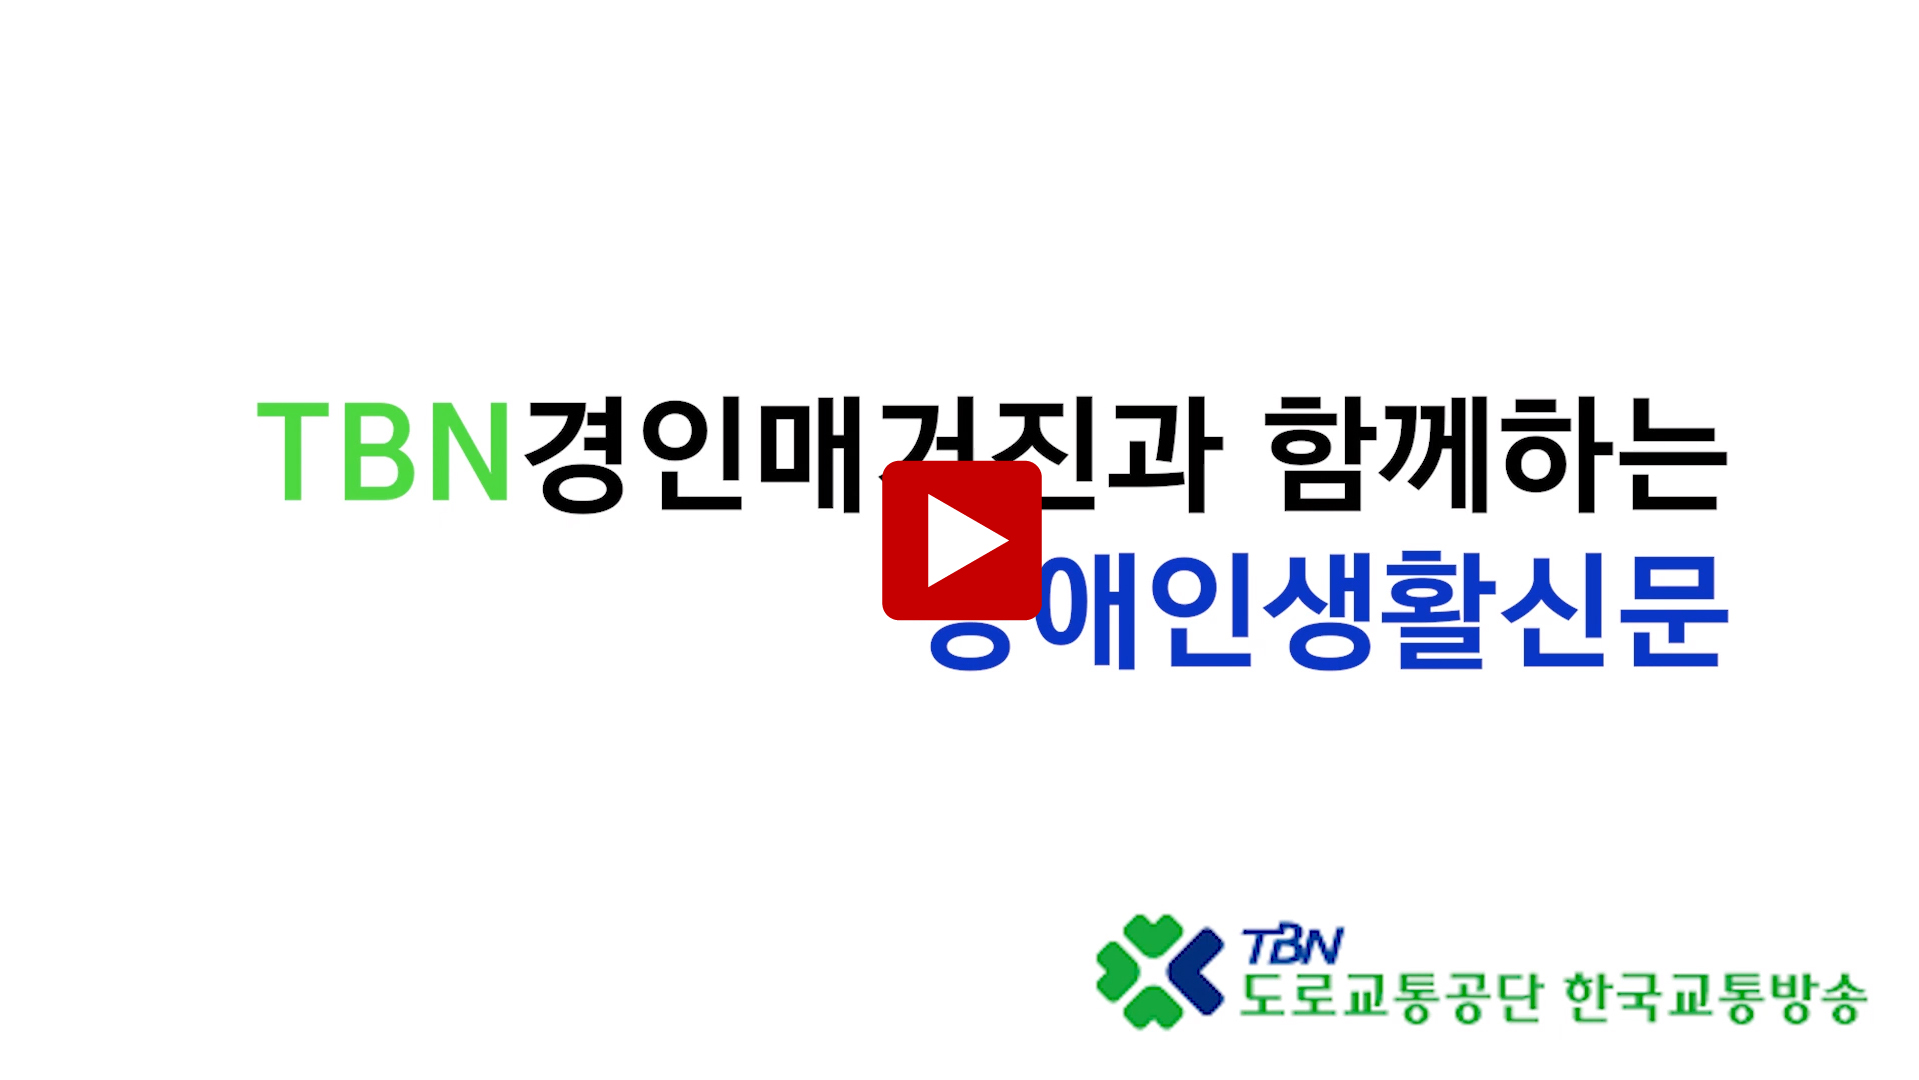 TBN경인매거진과 함께하는 장애인생활신문 -2022년 1월 26일 방송